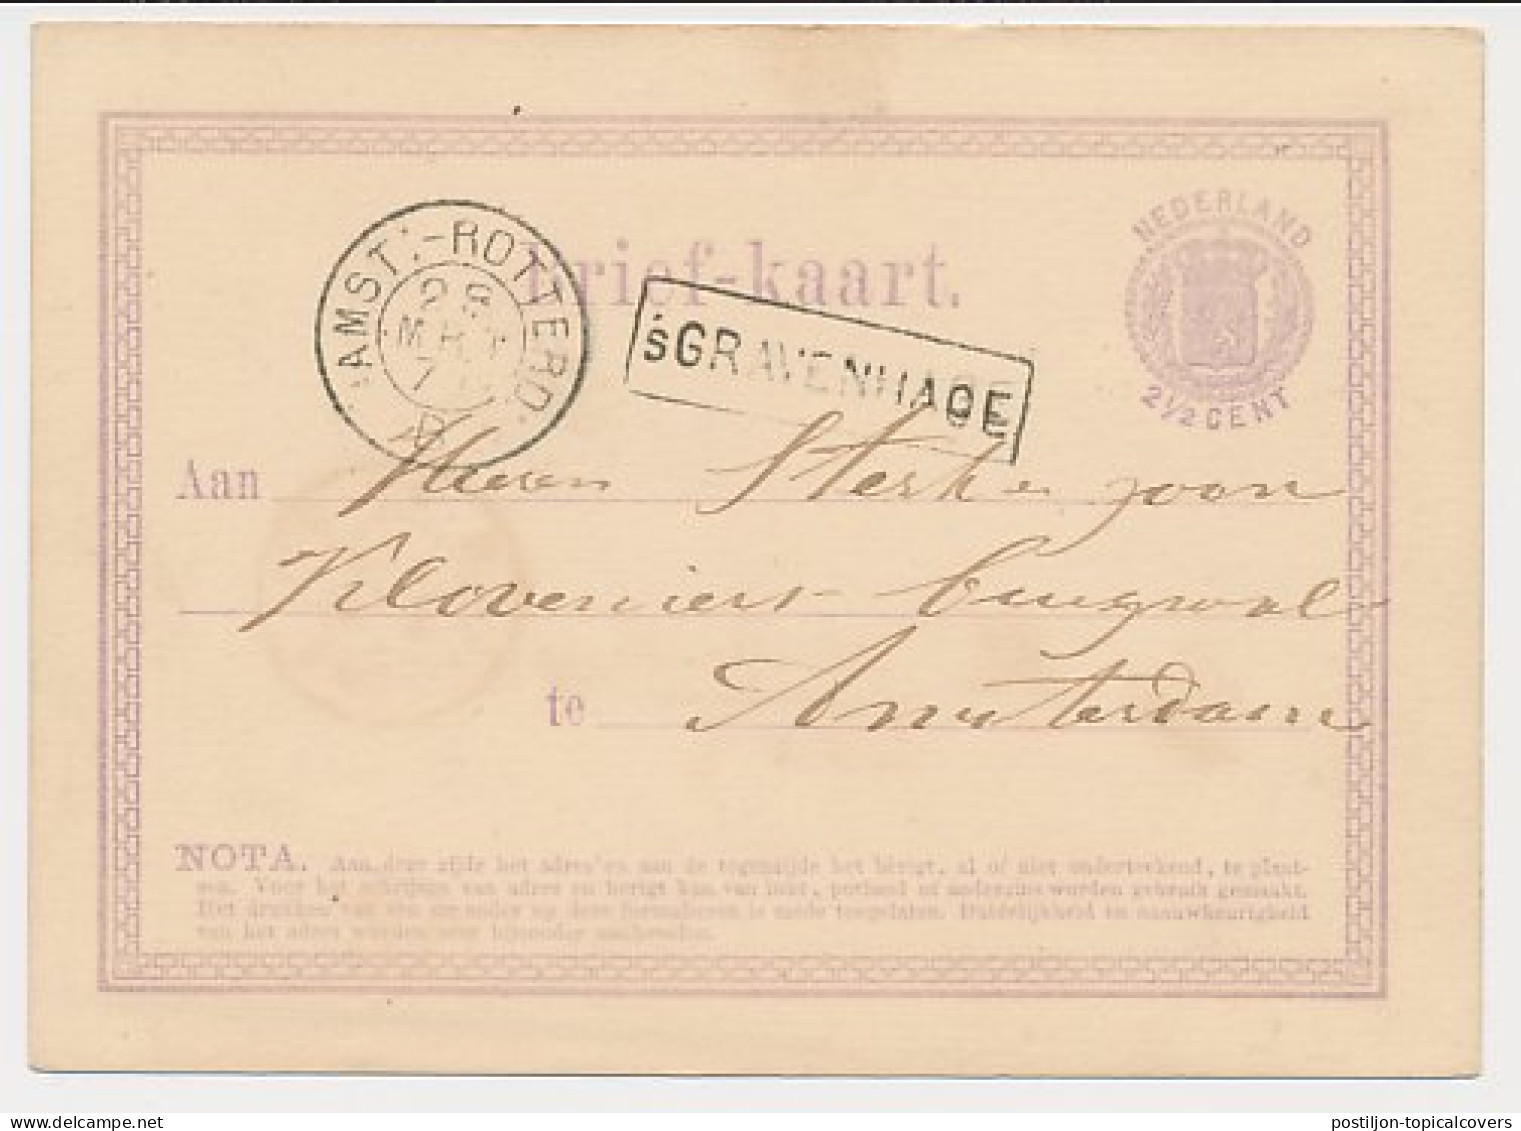 Trein Haltestempel S Gravenhage 1871 - Lettres & Documents